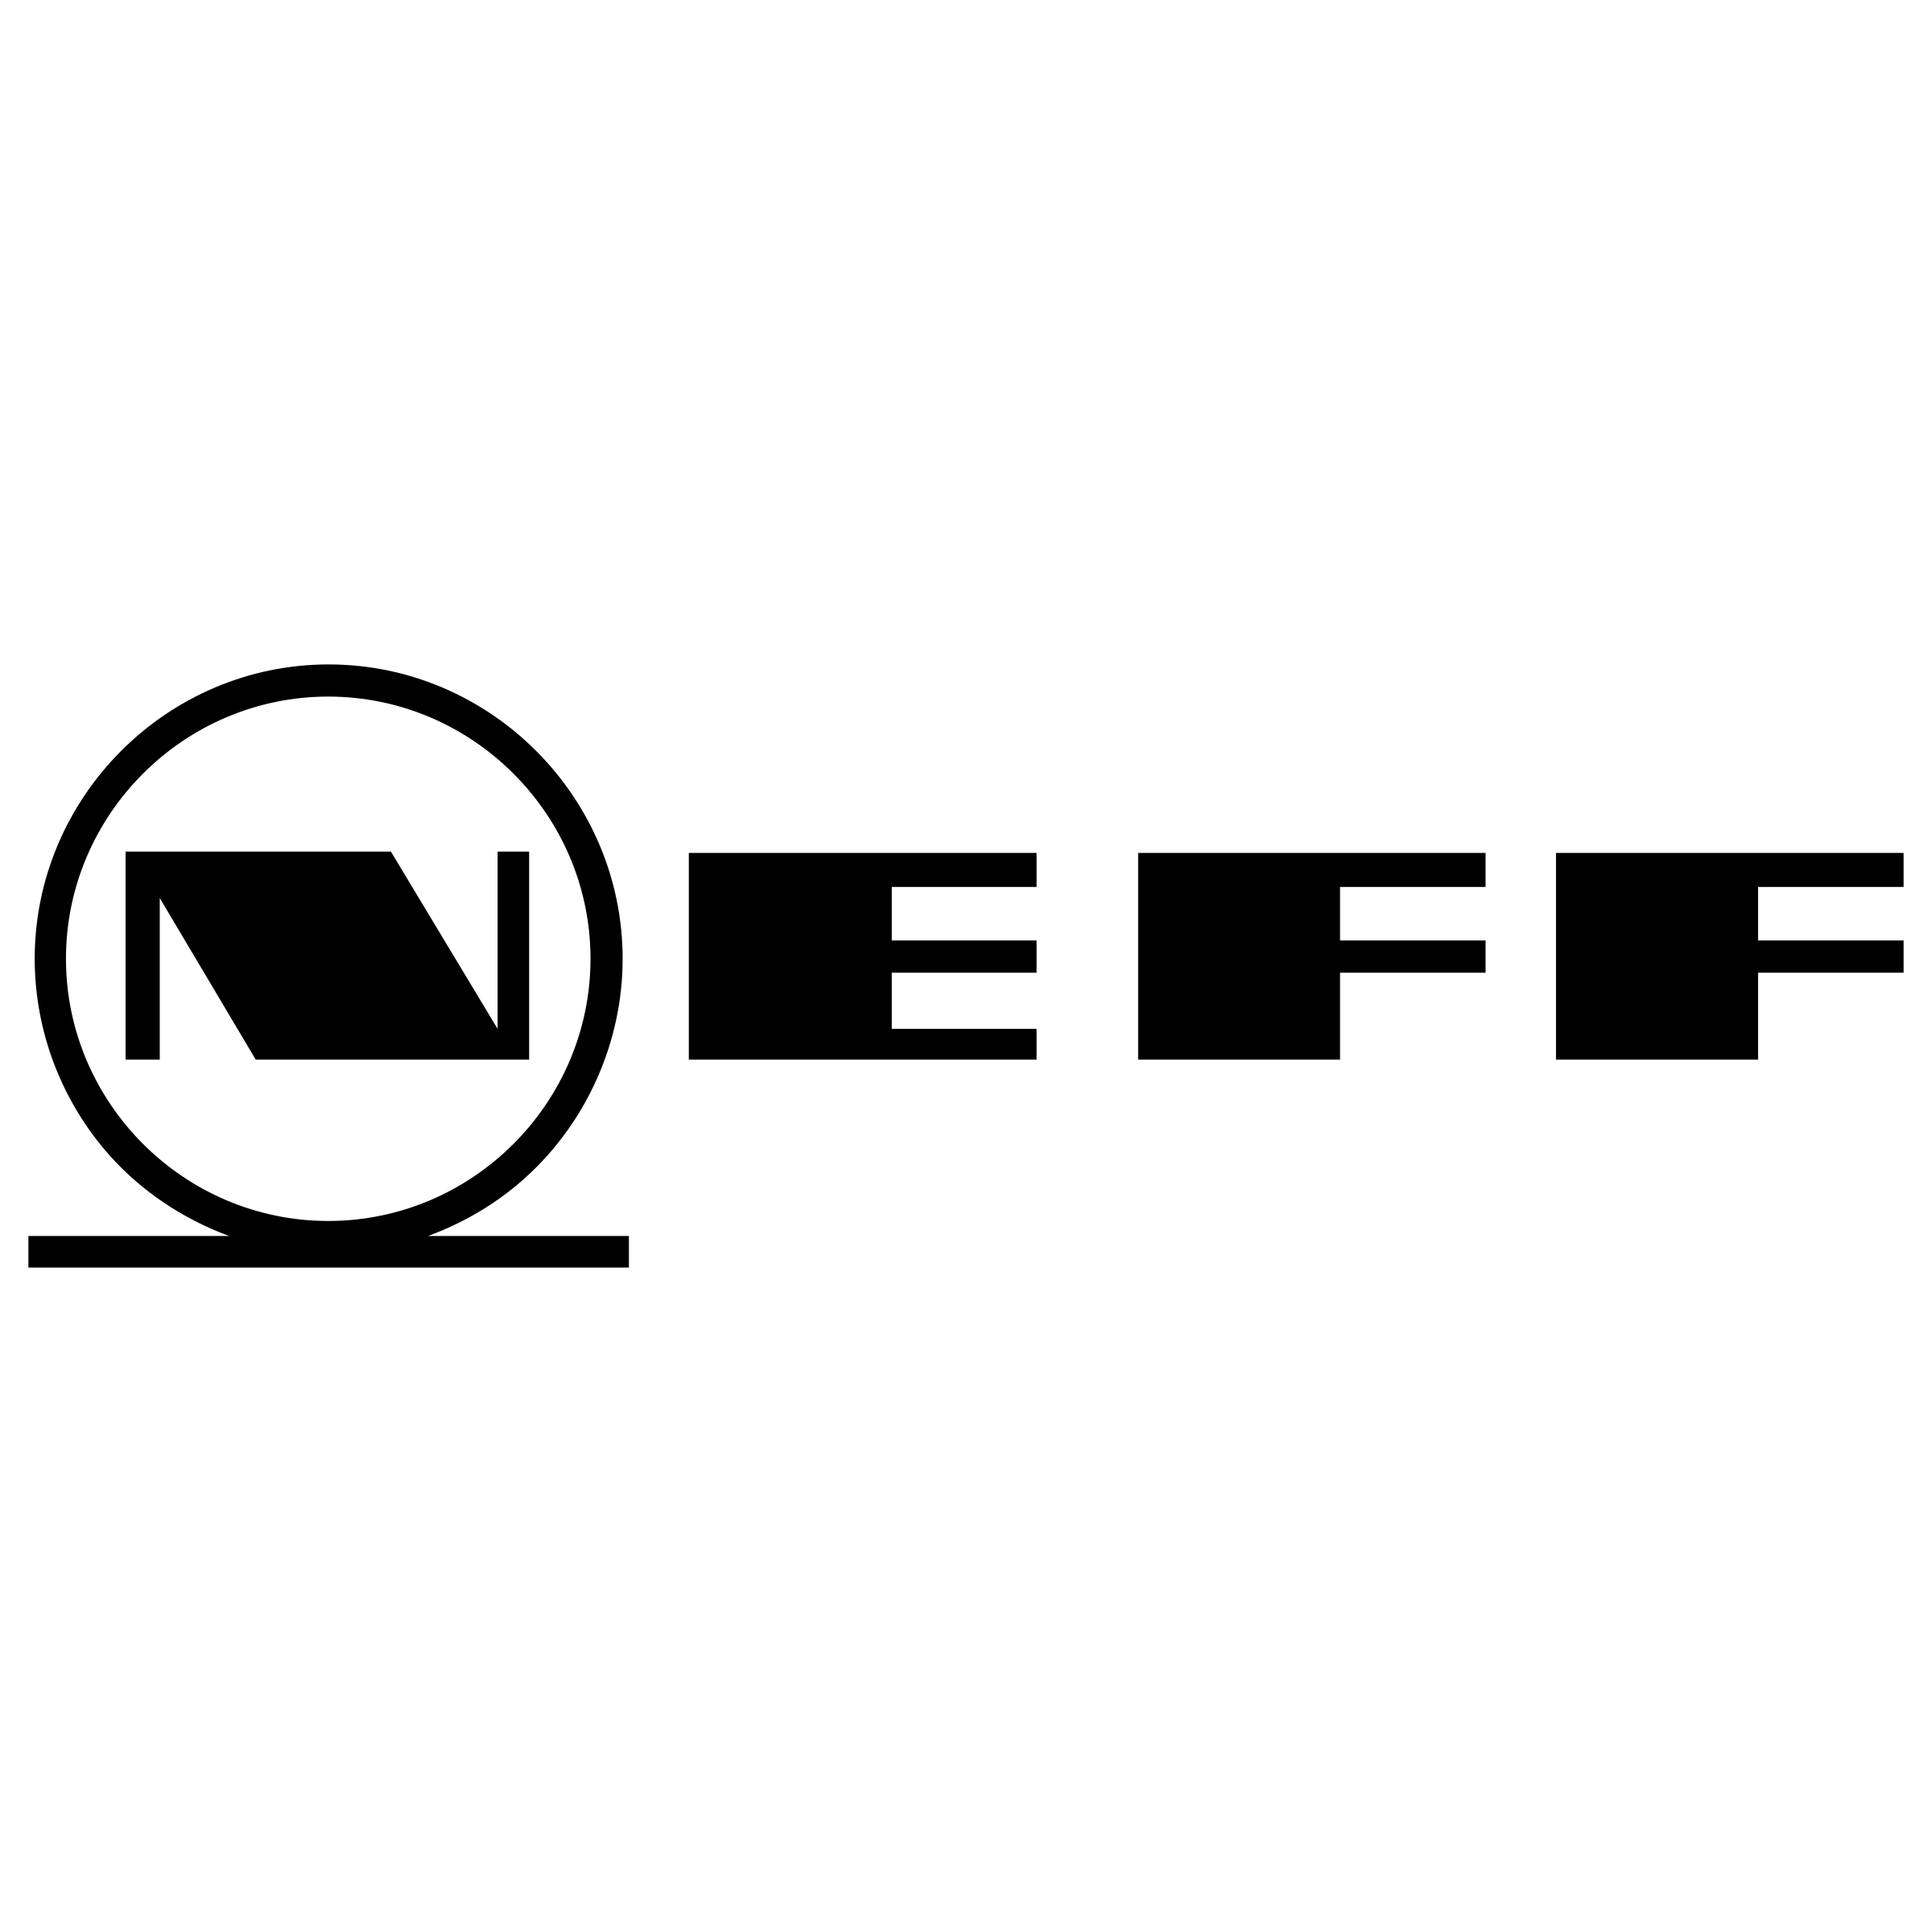 Black and White Neff Logo - Neff Logo PNG Transparent & SVG Vector